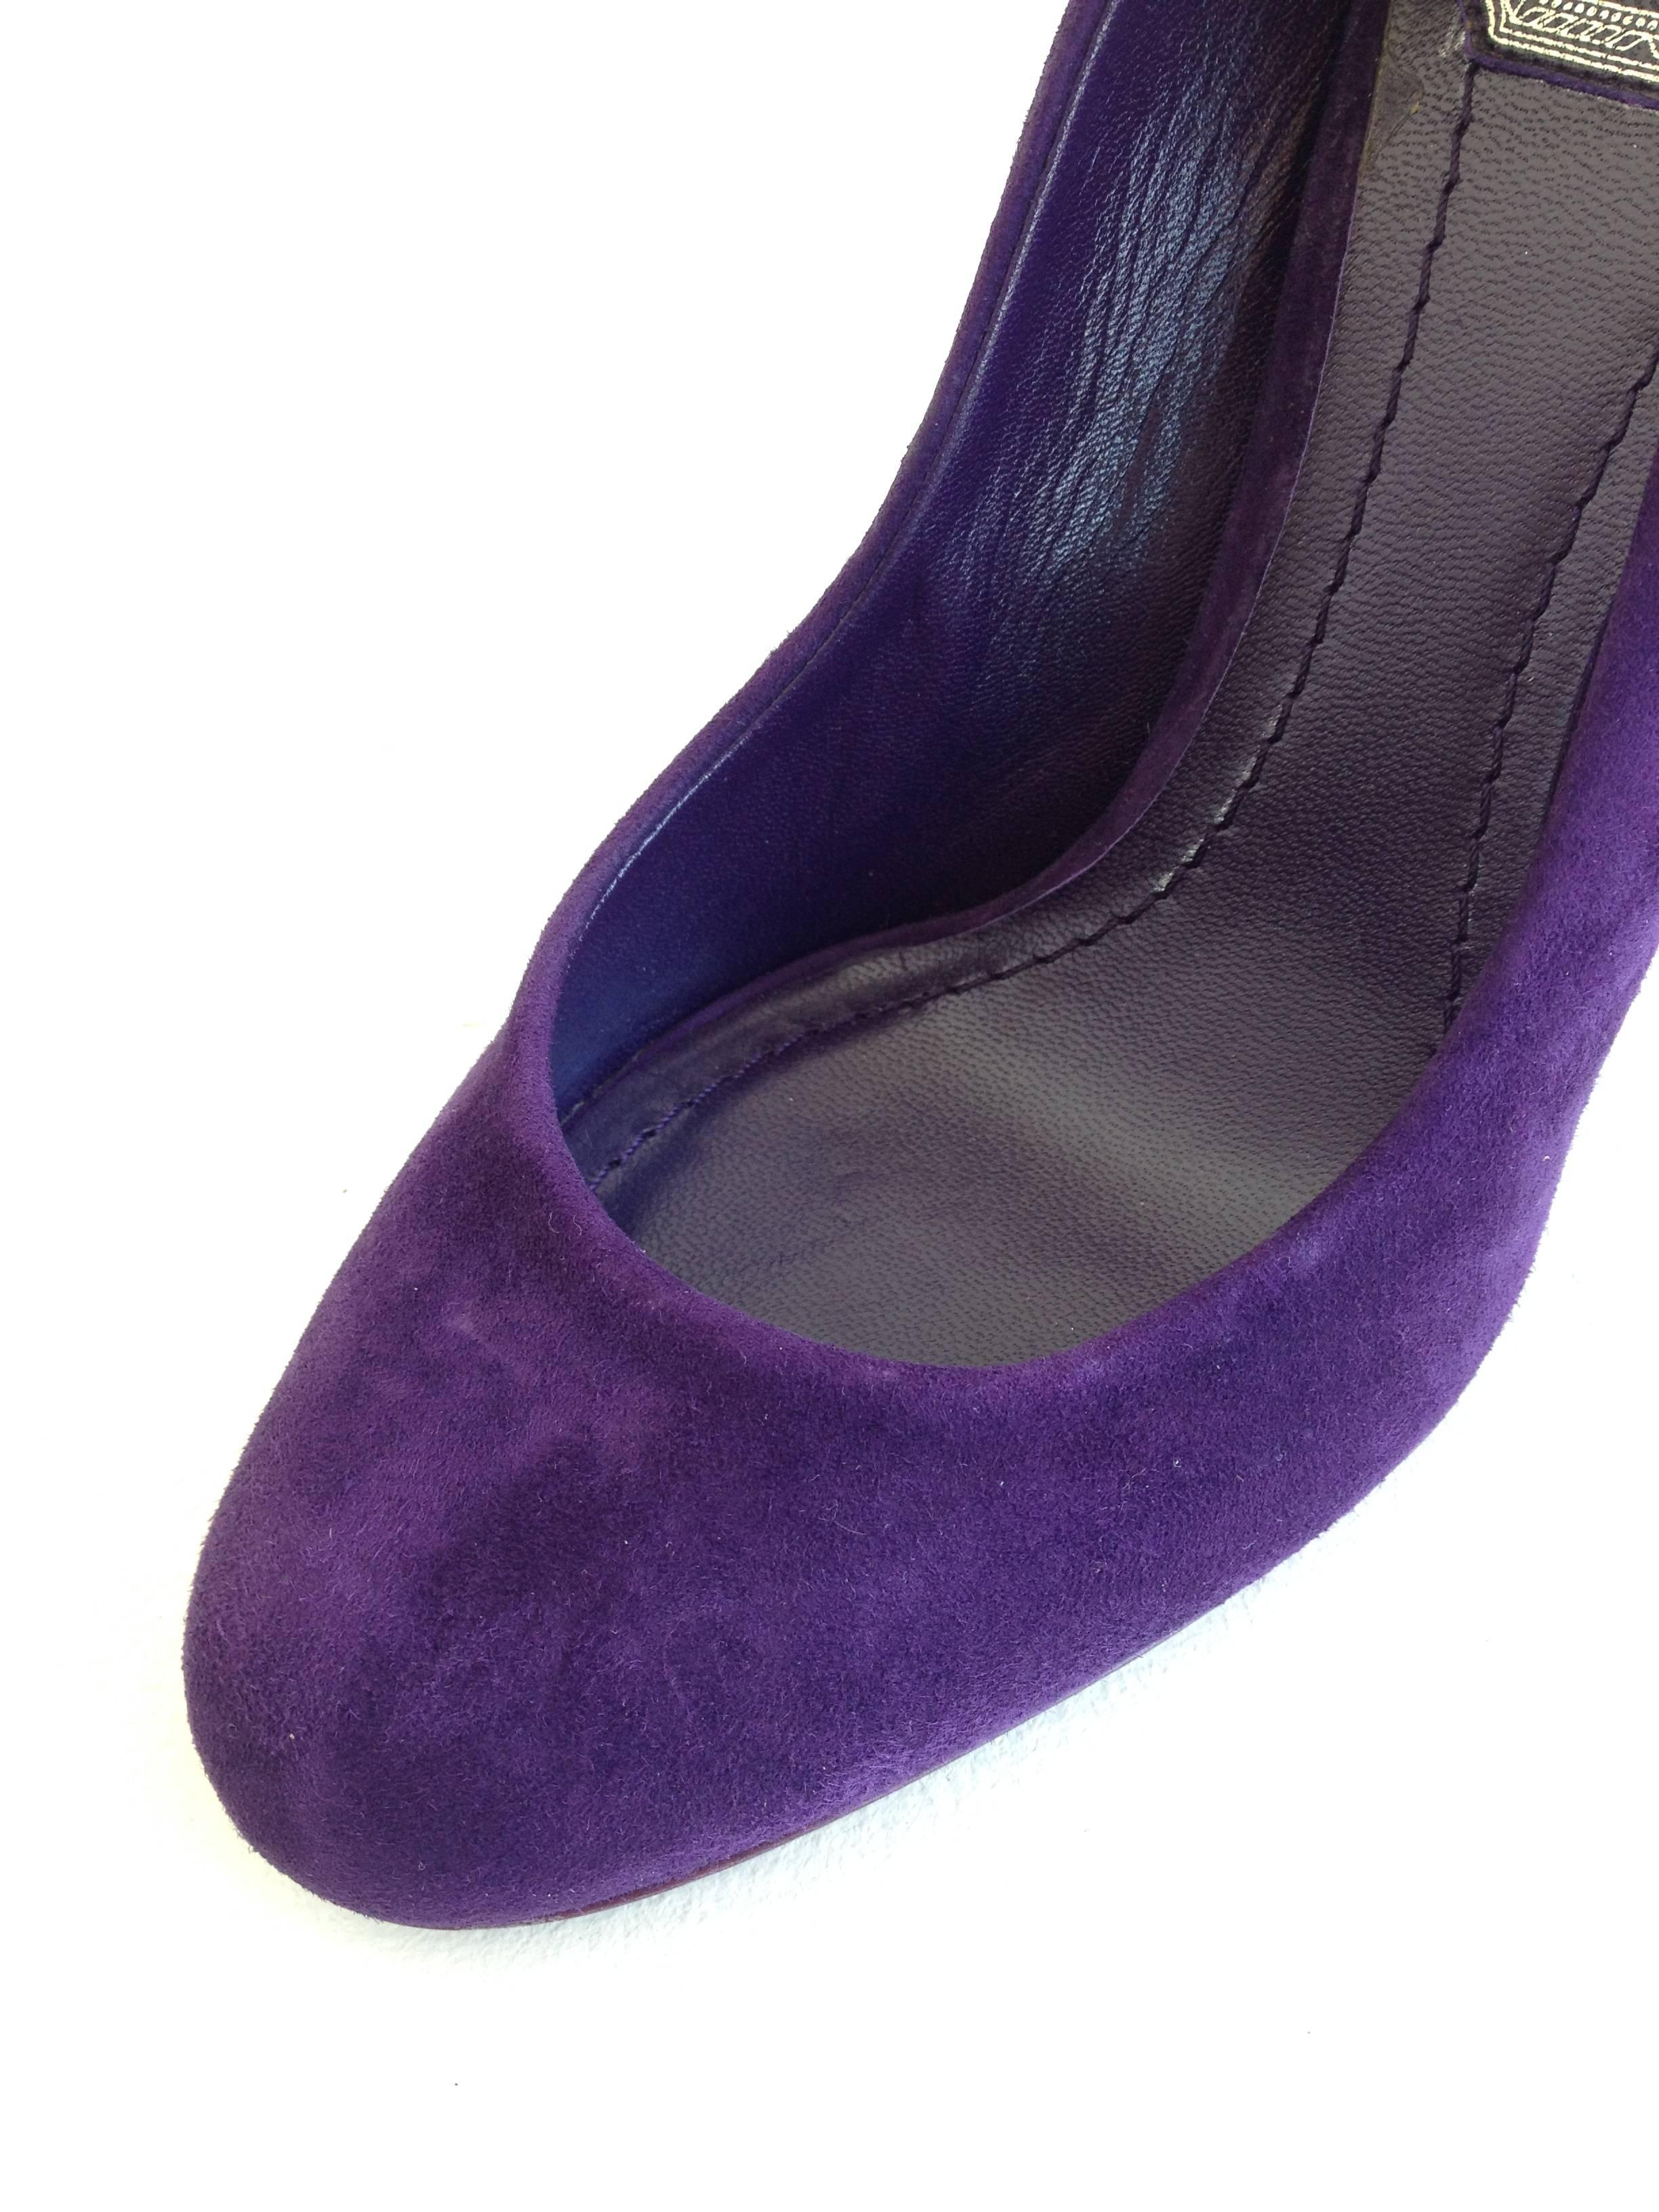 Women's Christian Dior Purple Suede Block Heeled Pumps Size 37 (6.5)